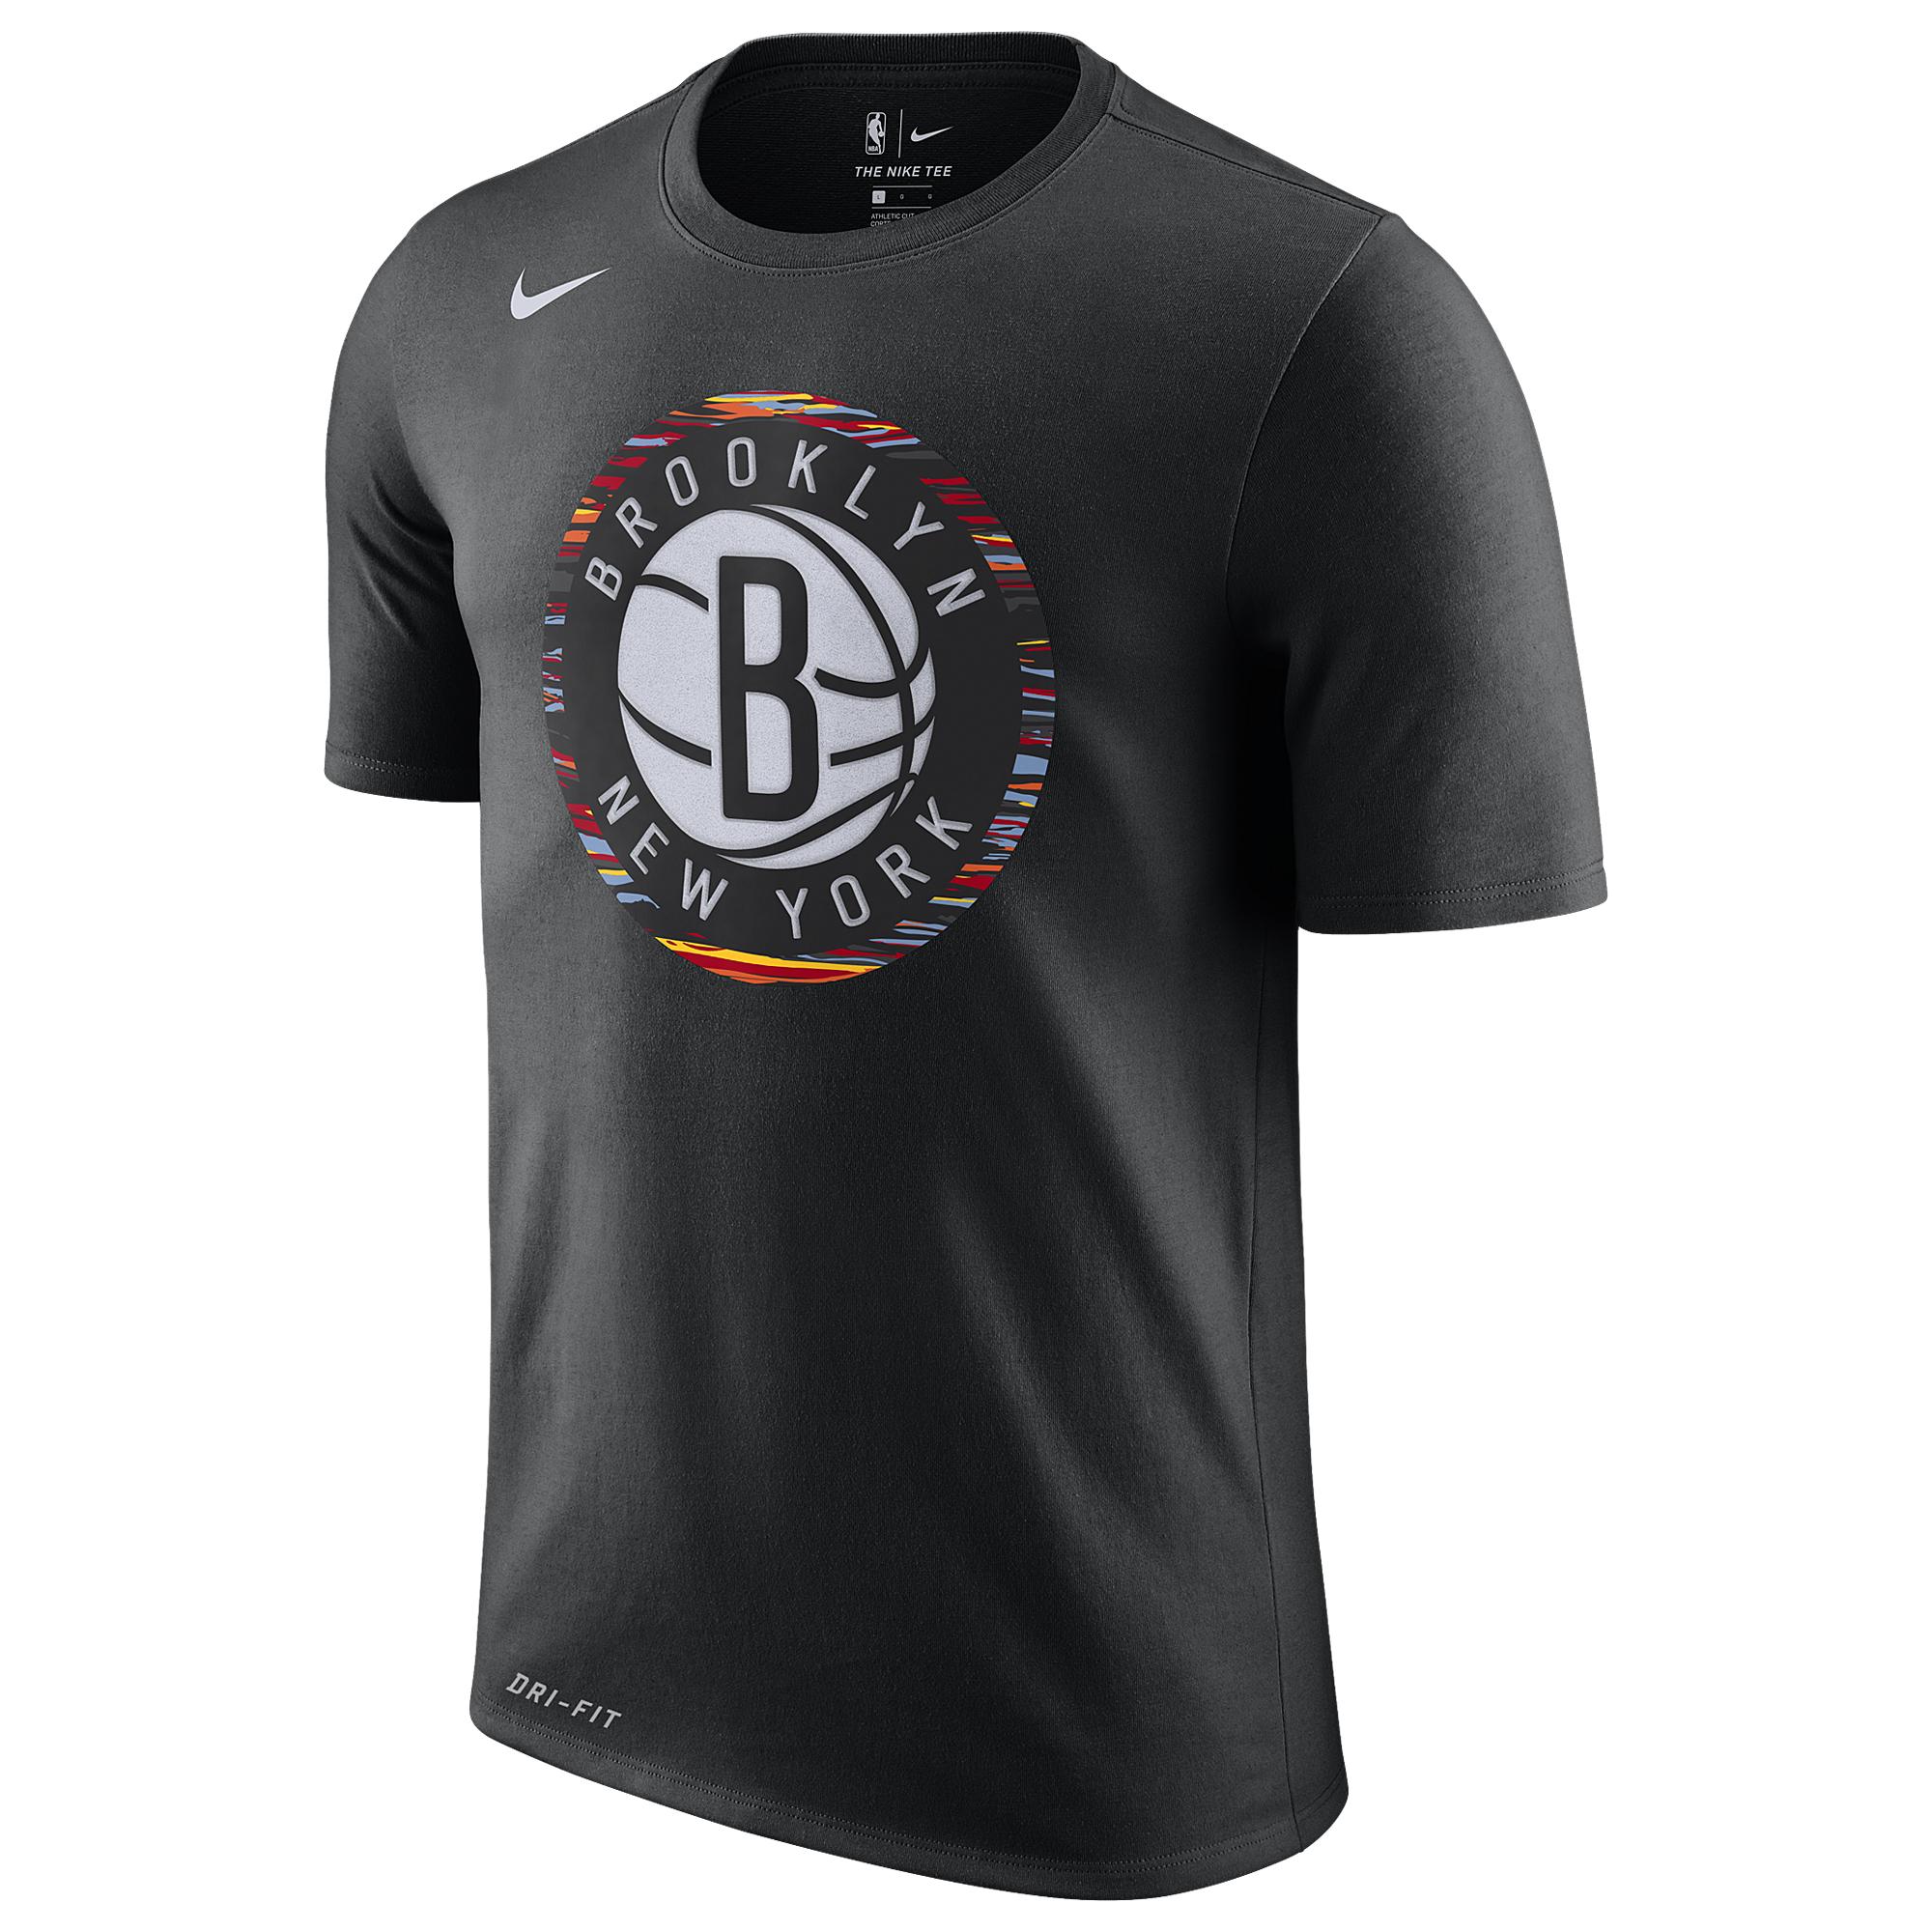 Nike Brooklyn Nets Nba City Edition Dry T-shirt in Black for Men - Lyst